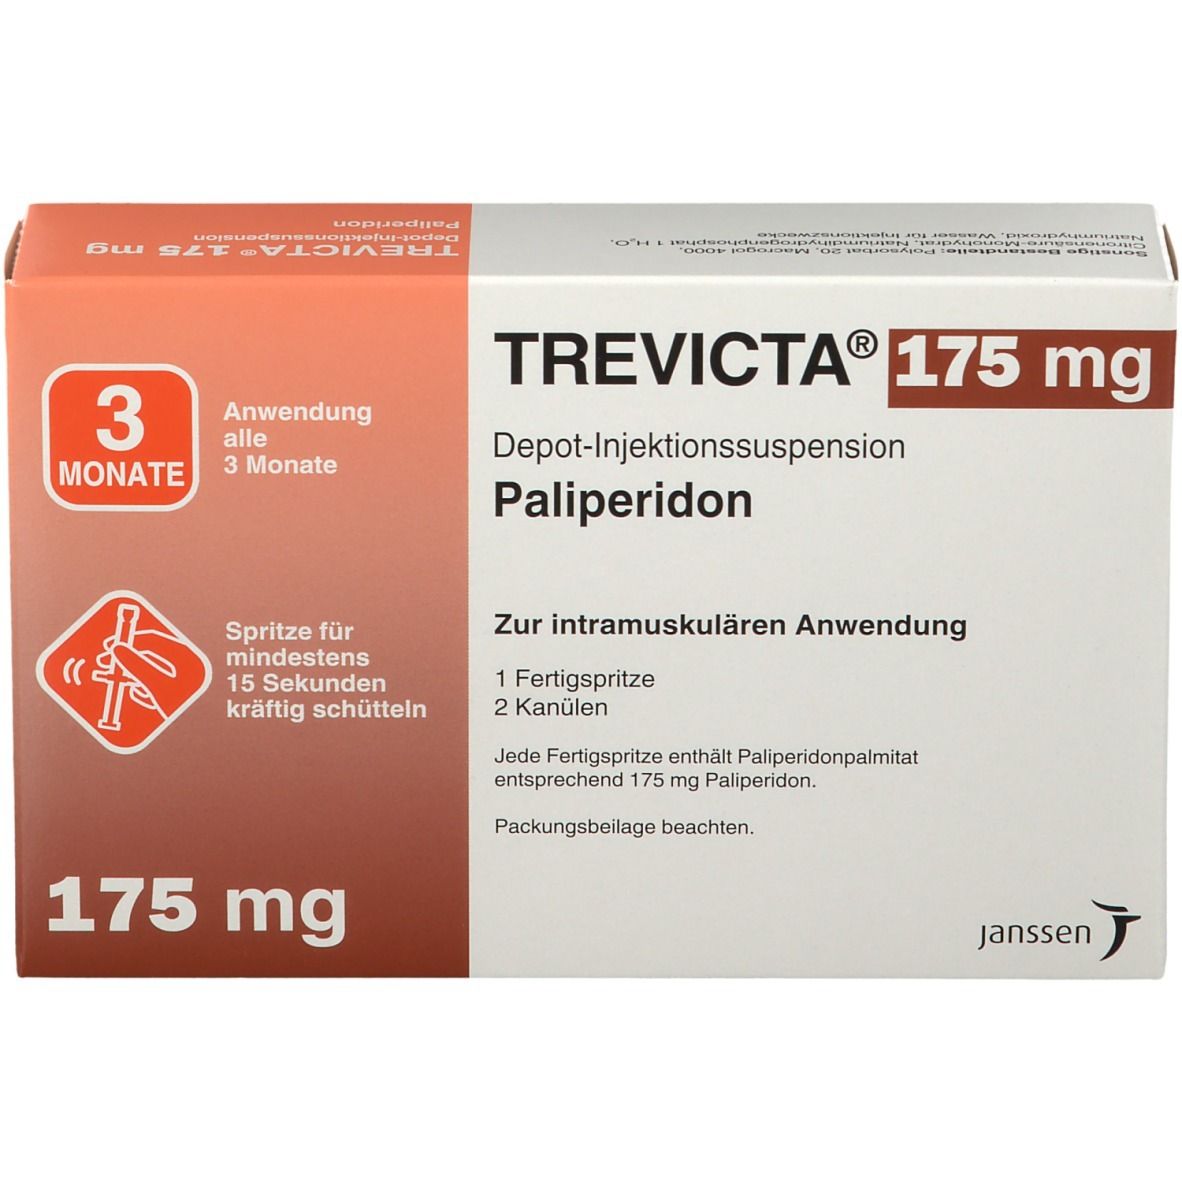 TREVICTA® 175 mg